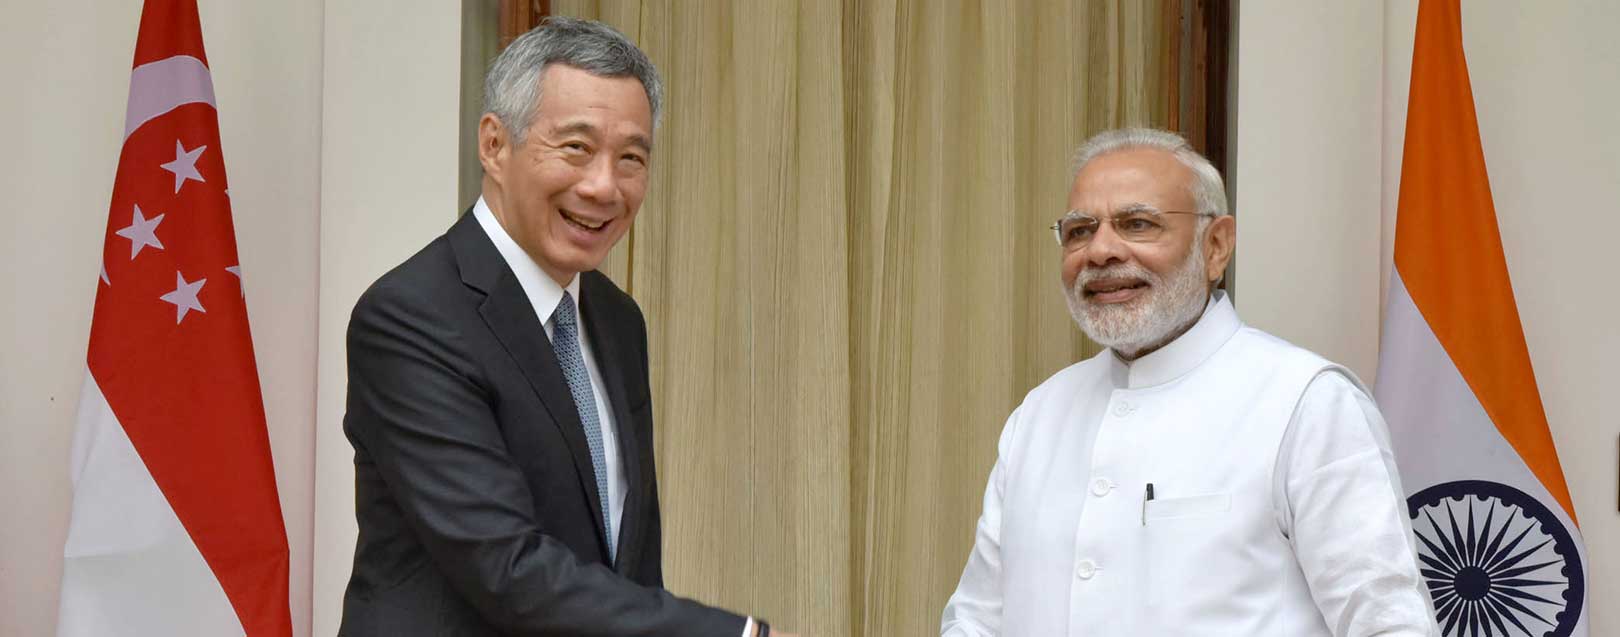 India, Singapore look to start “next phase” of economic ties